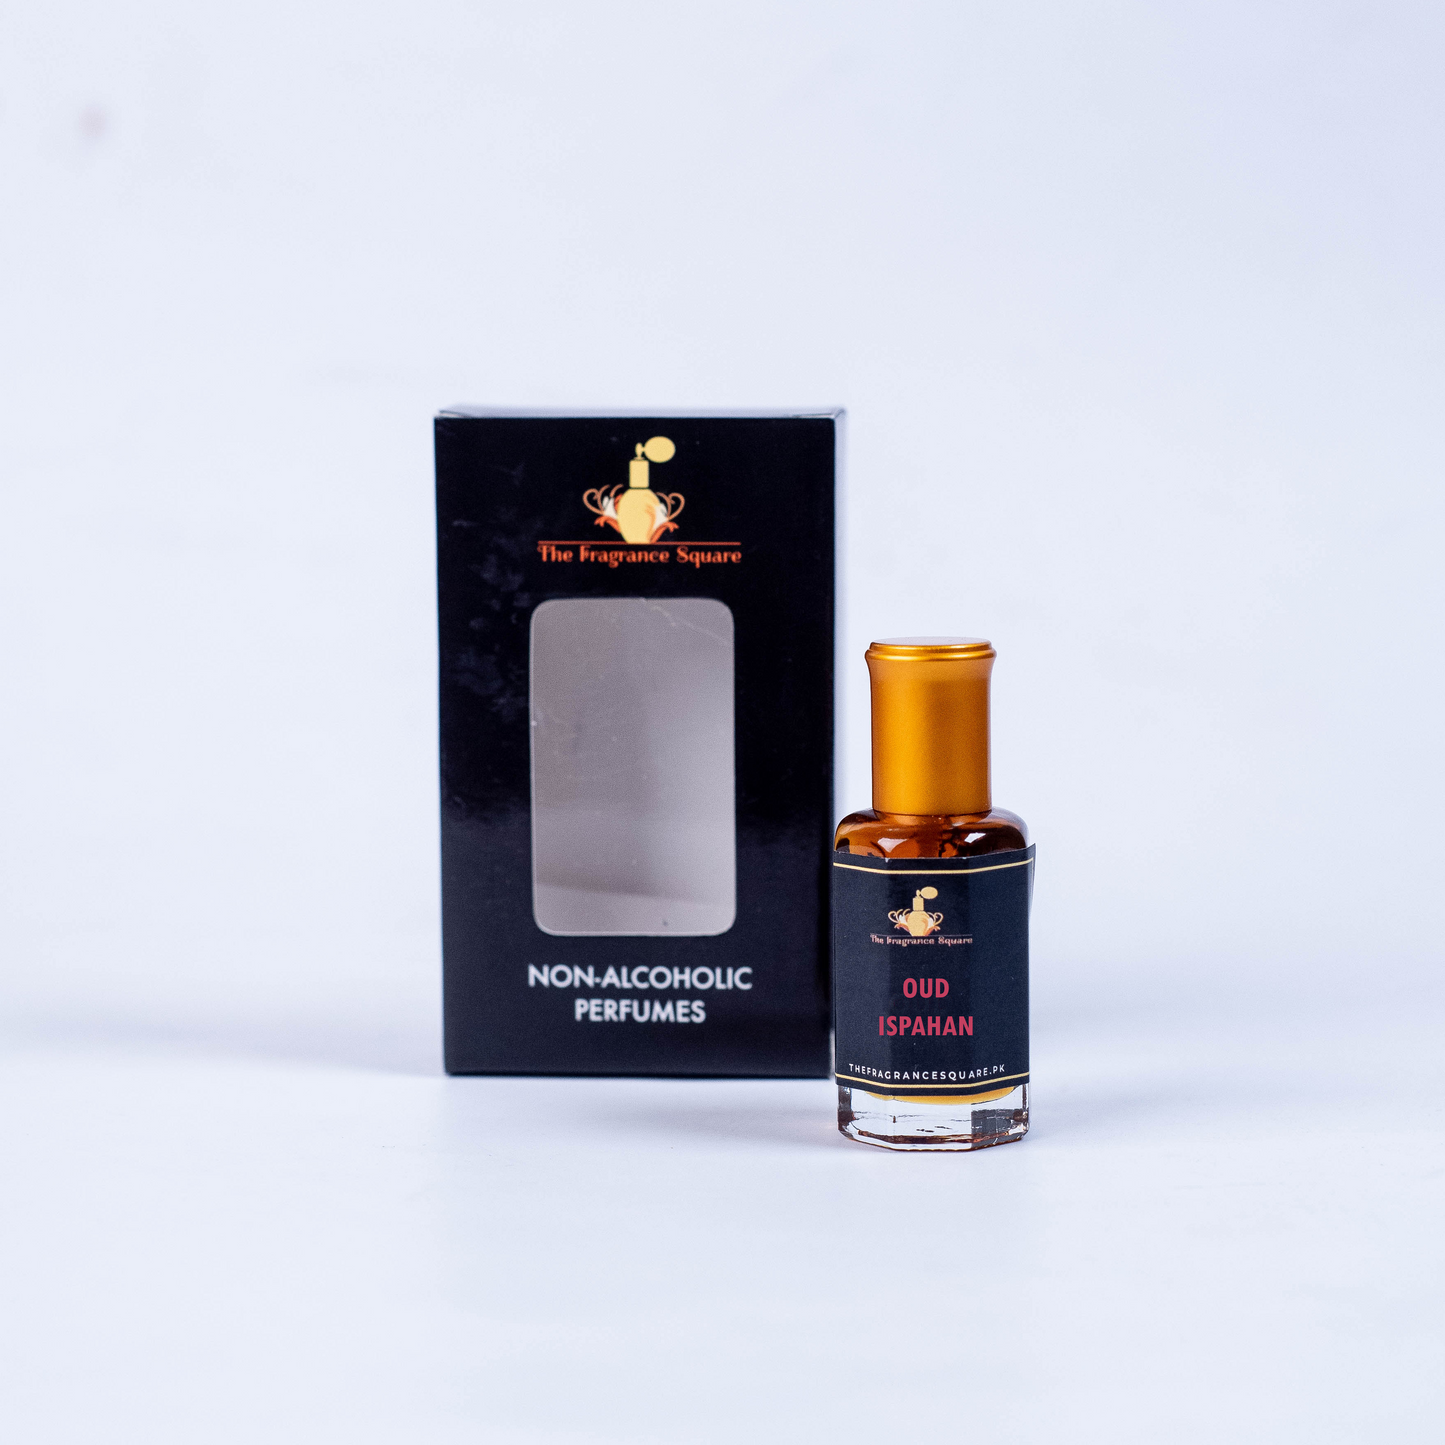 Oud Ispahan | Perfume Oil